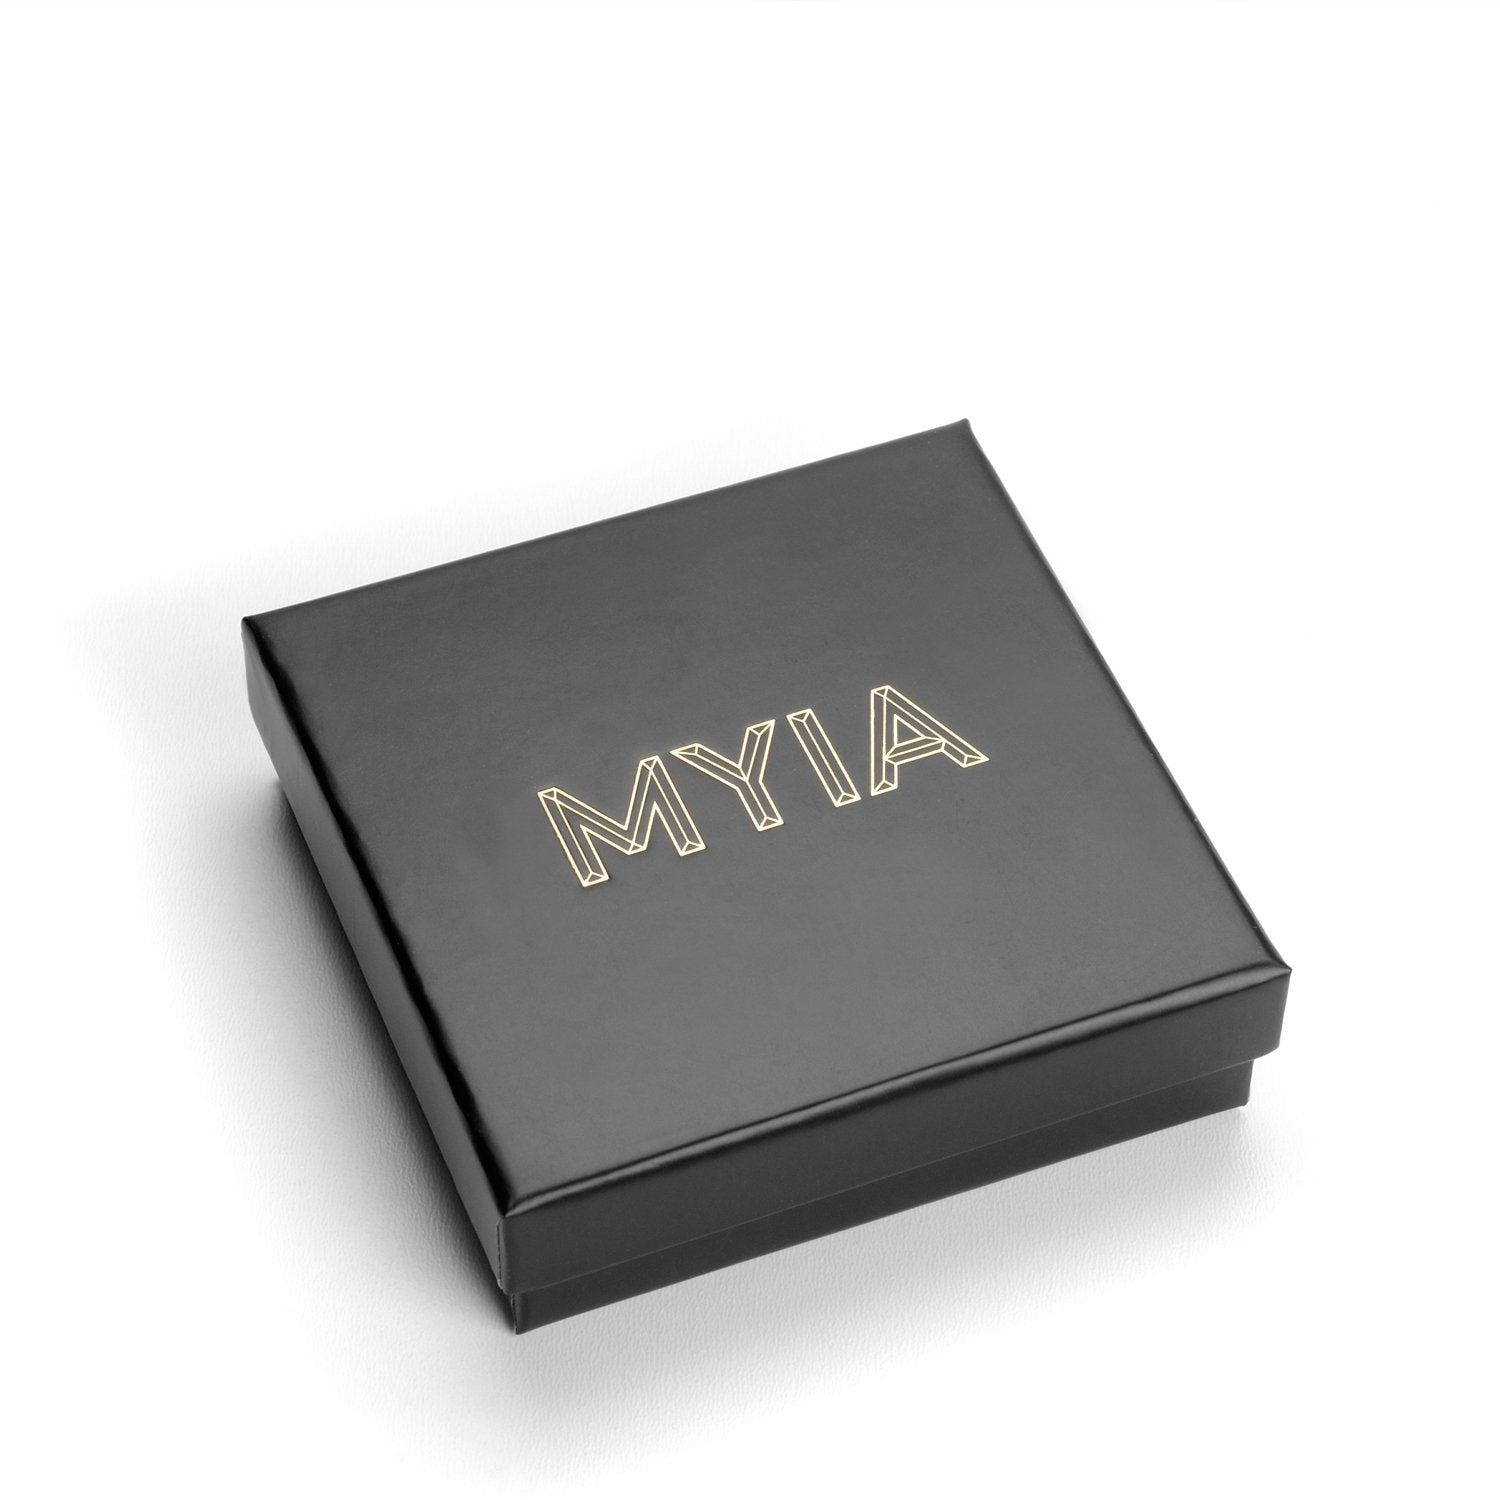 Facett Initial V Round Signet Ring - Silver - Myia Bonner Jewellery